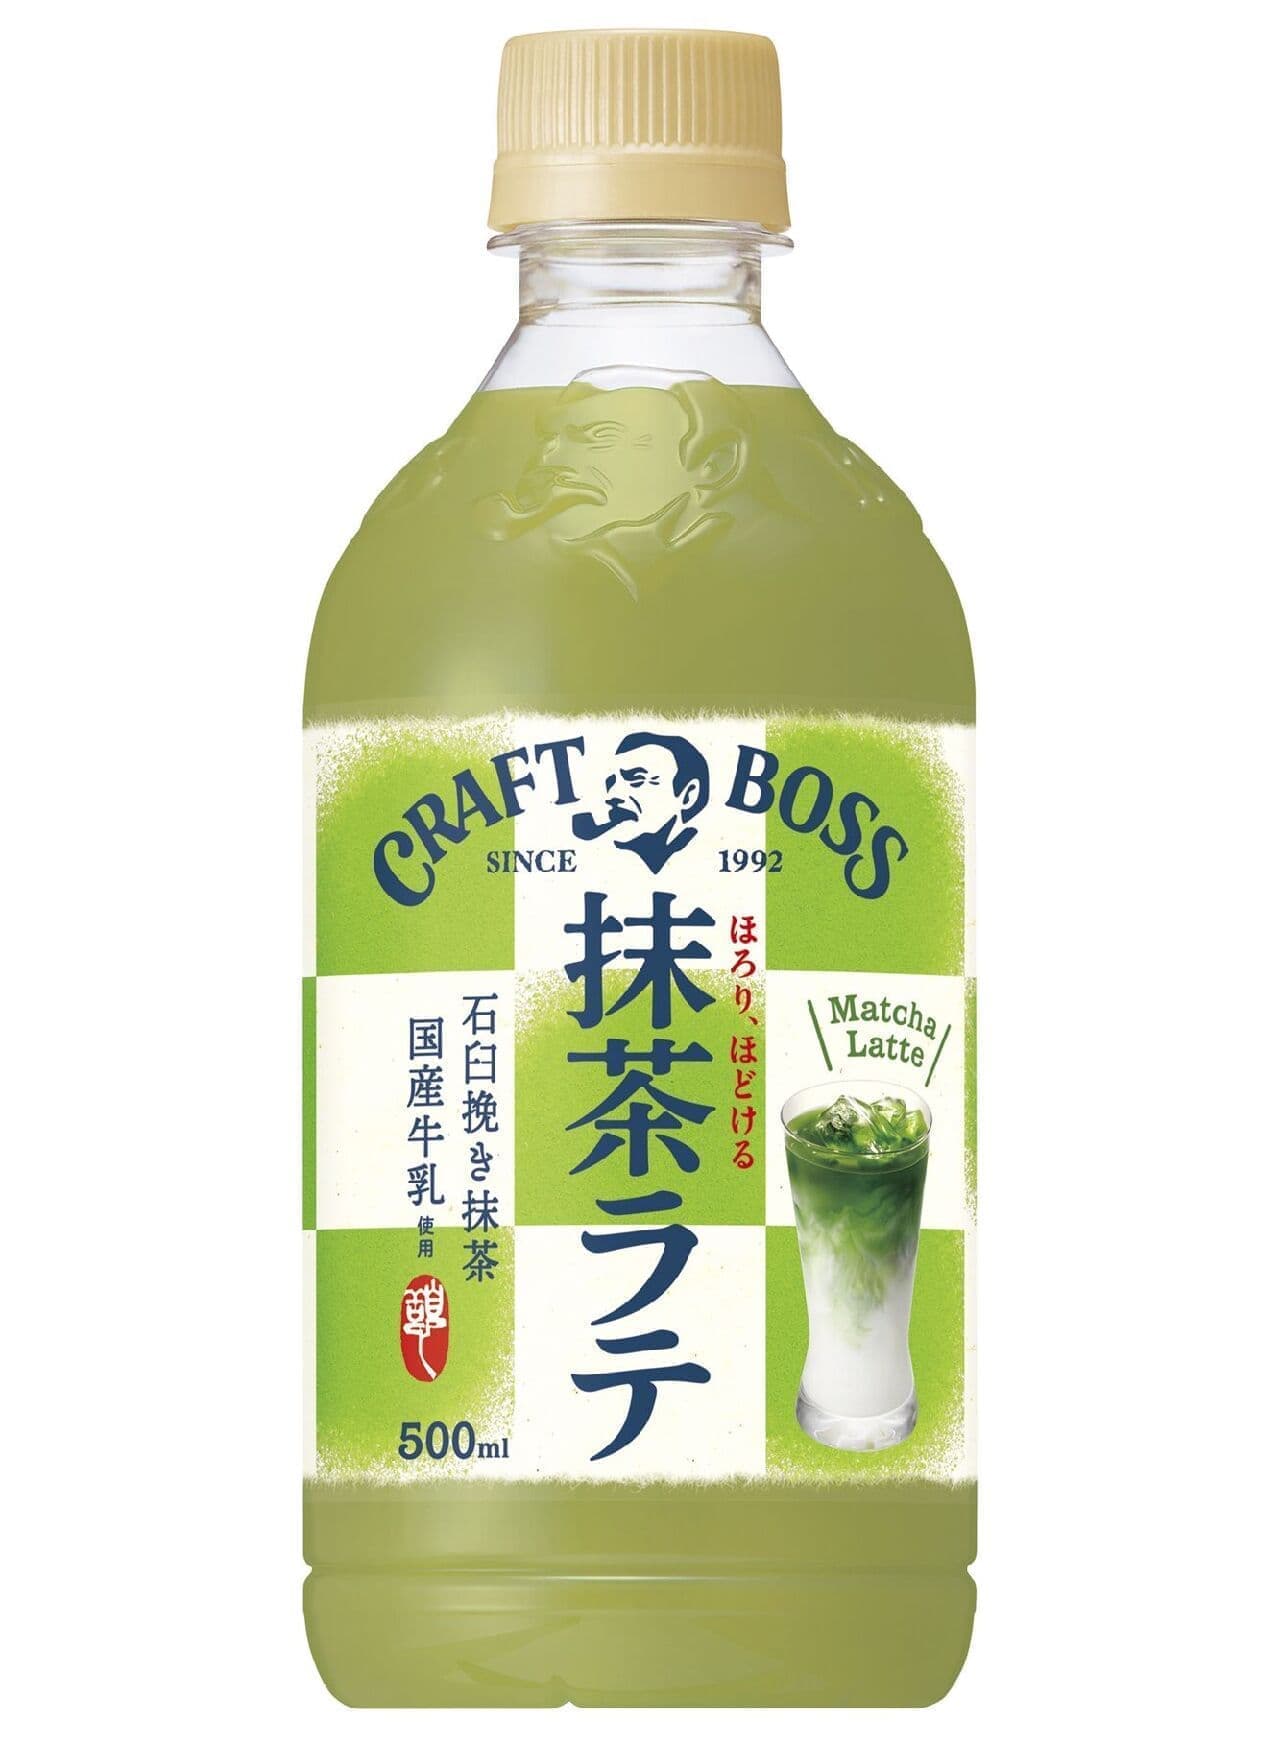 Suntory "Craft Boss Matcha Latte"